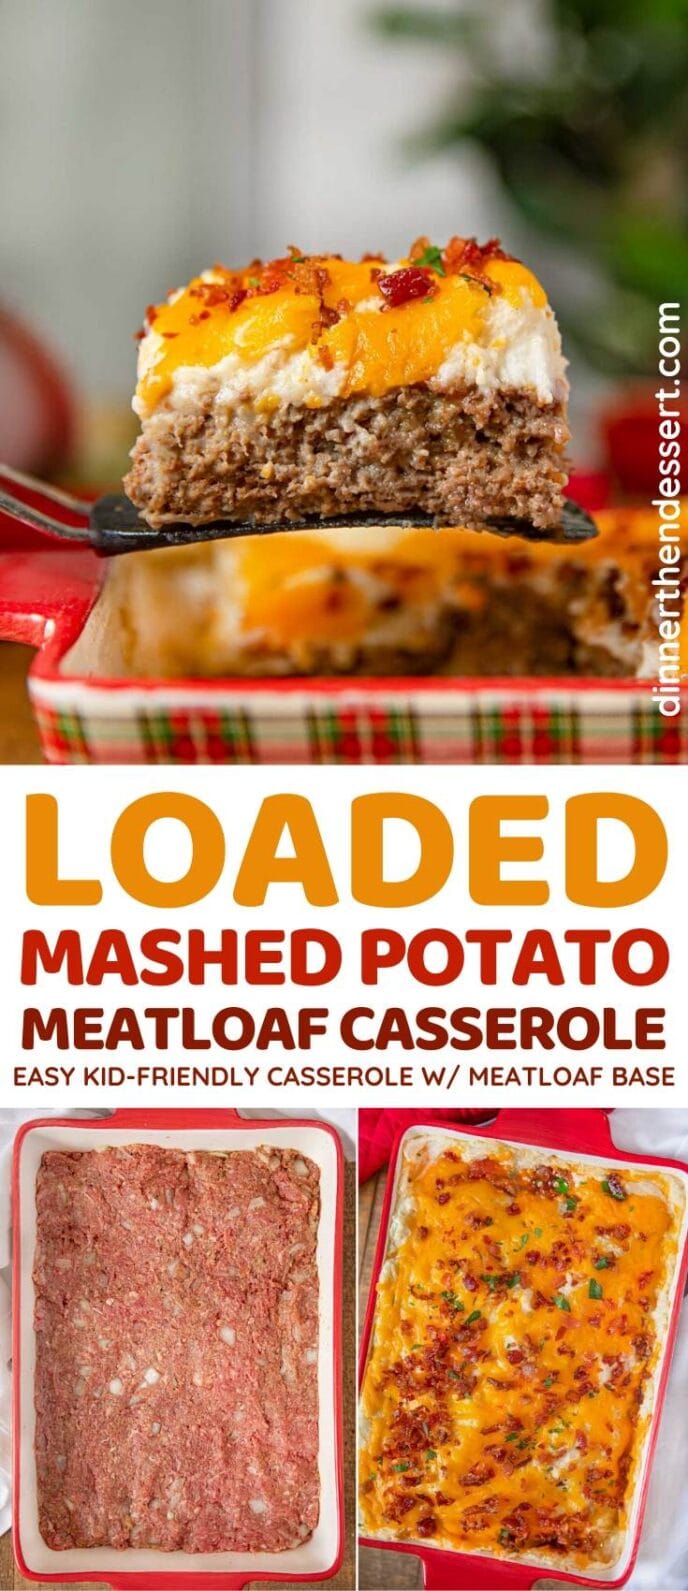 Loaded Mashed Potato Meatloaf Casserole collage